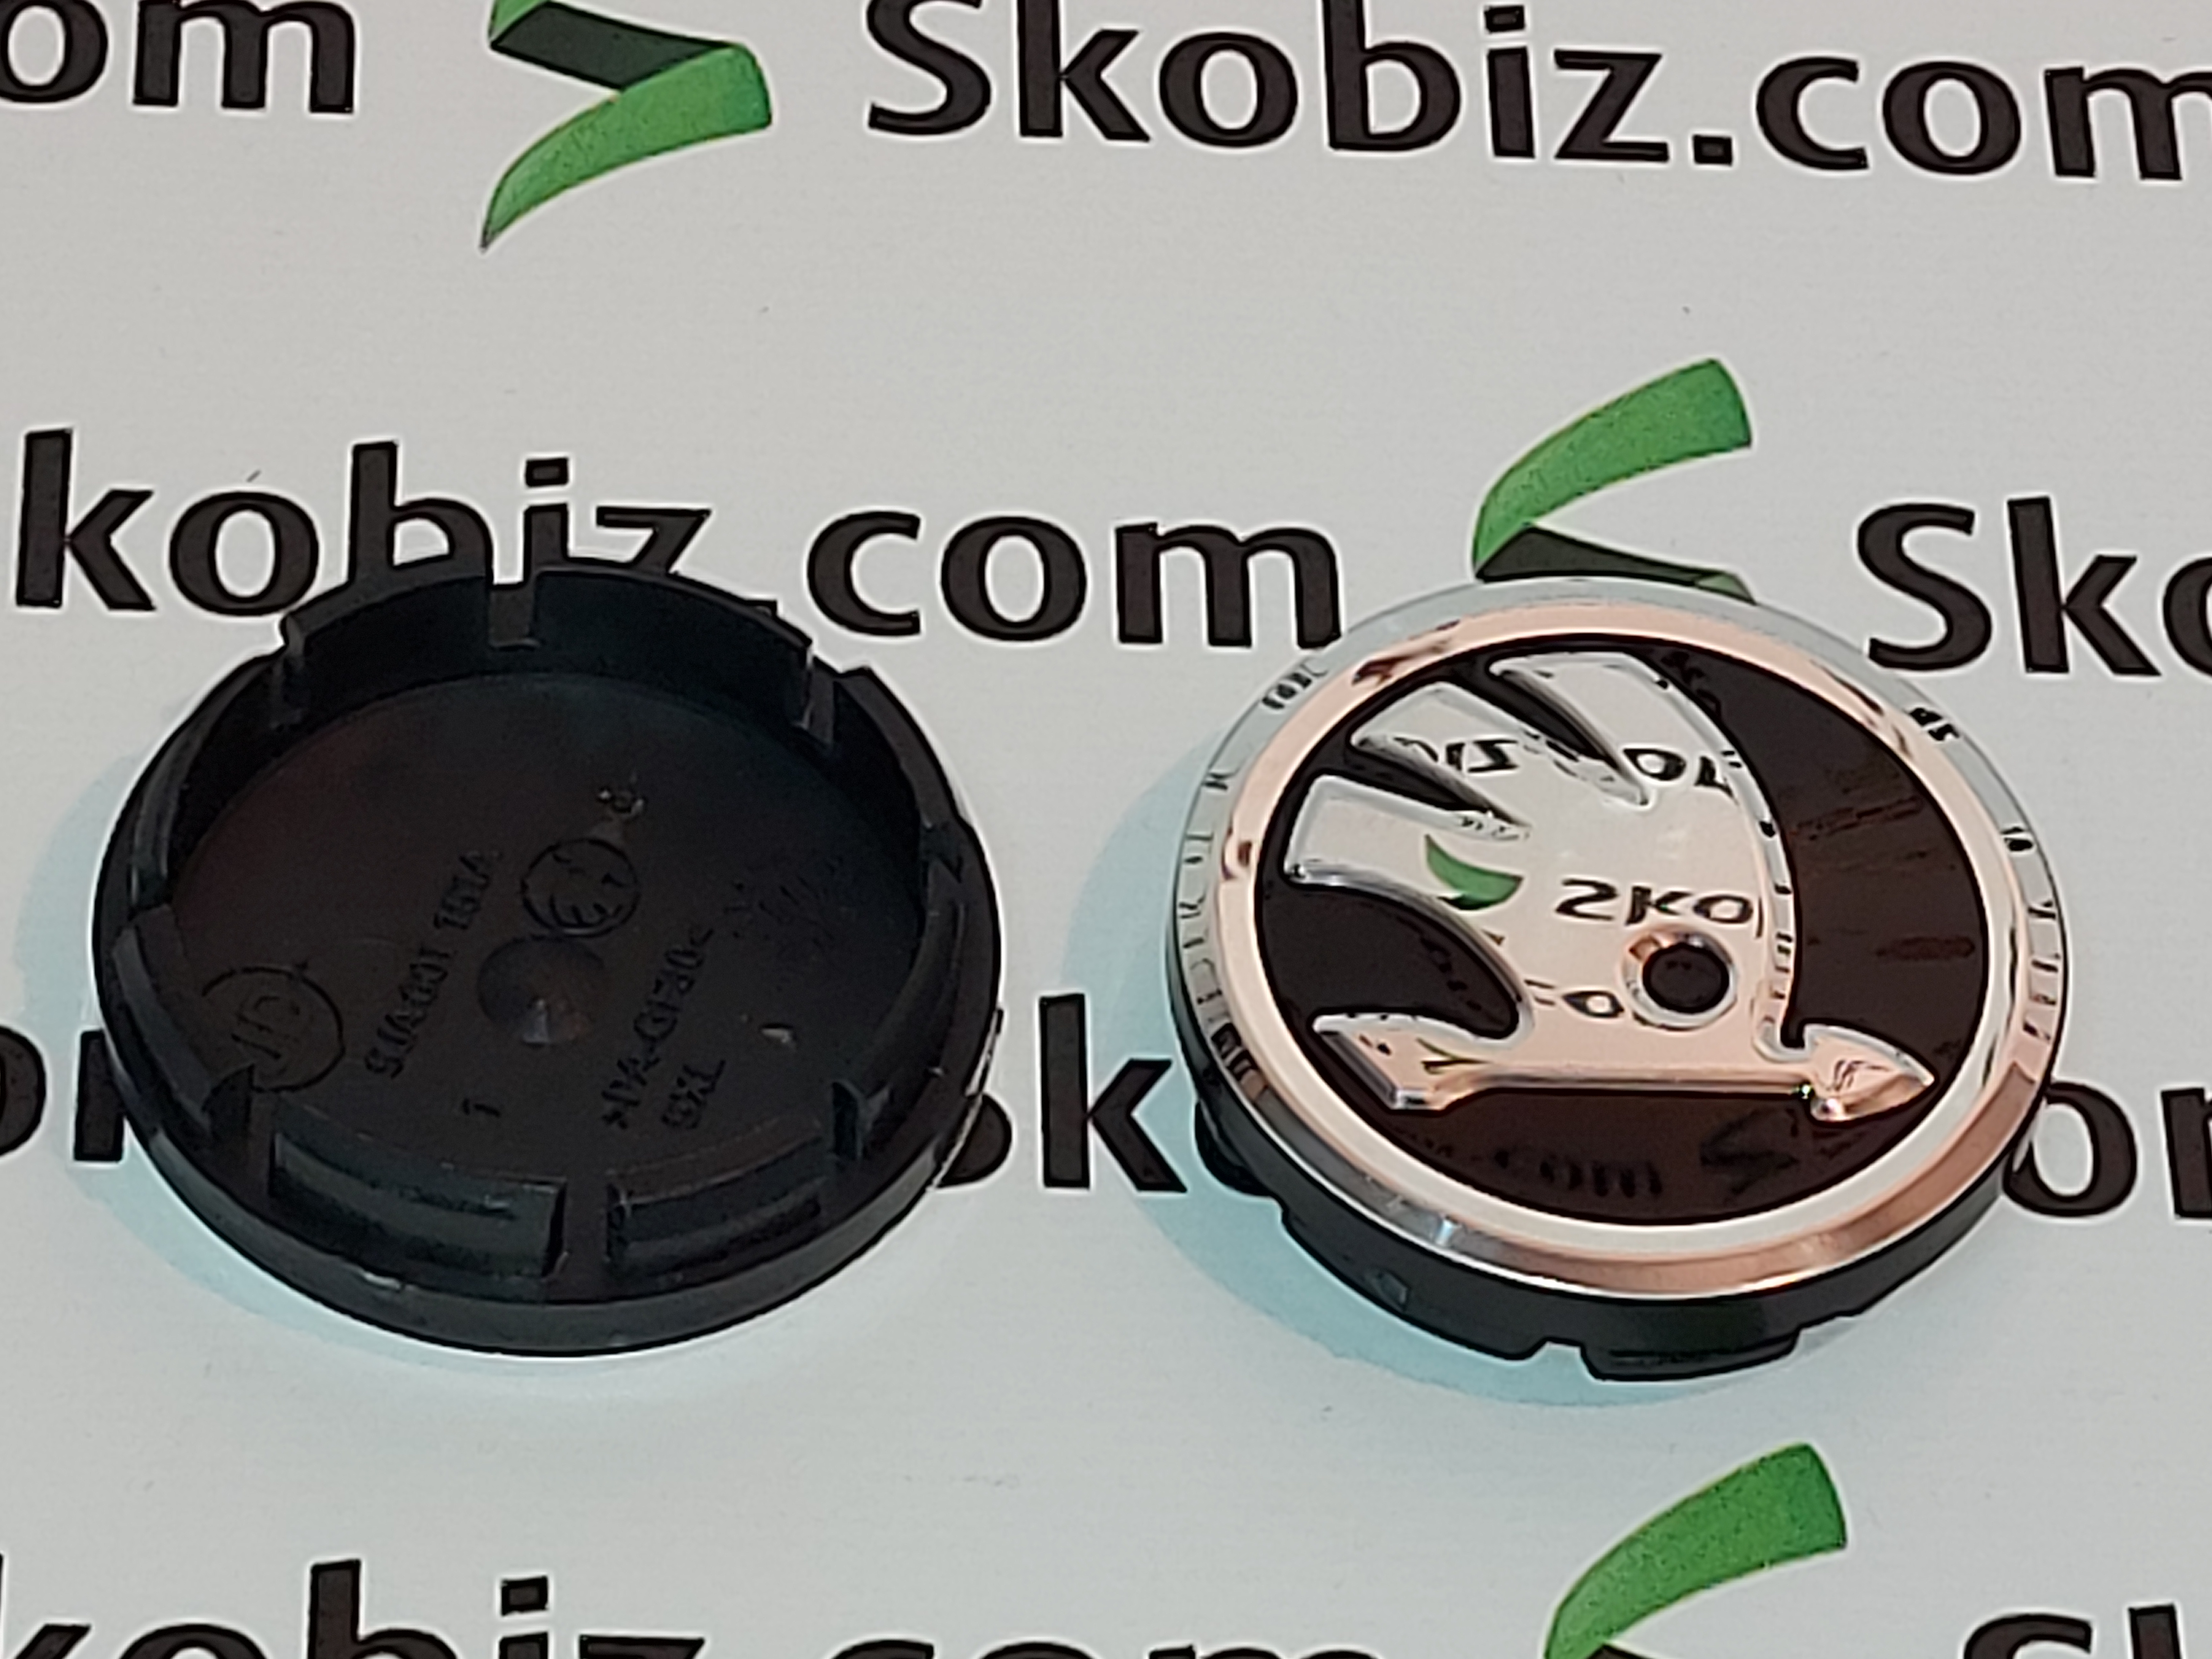 Колпачок диска легкосплавного Skoda new хром 55-56 мм